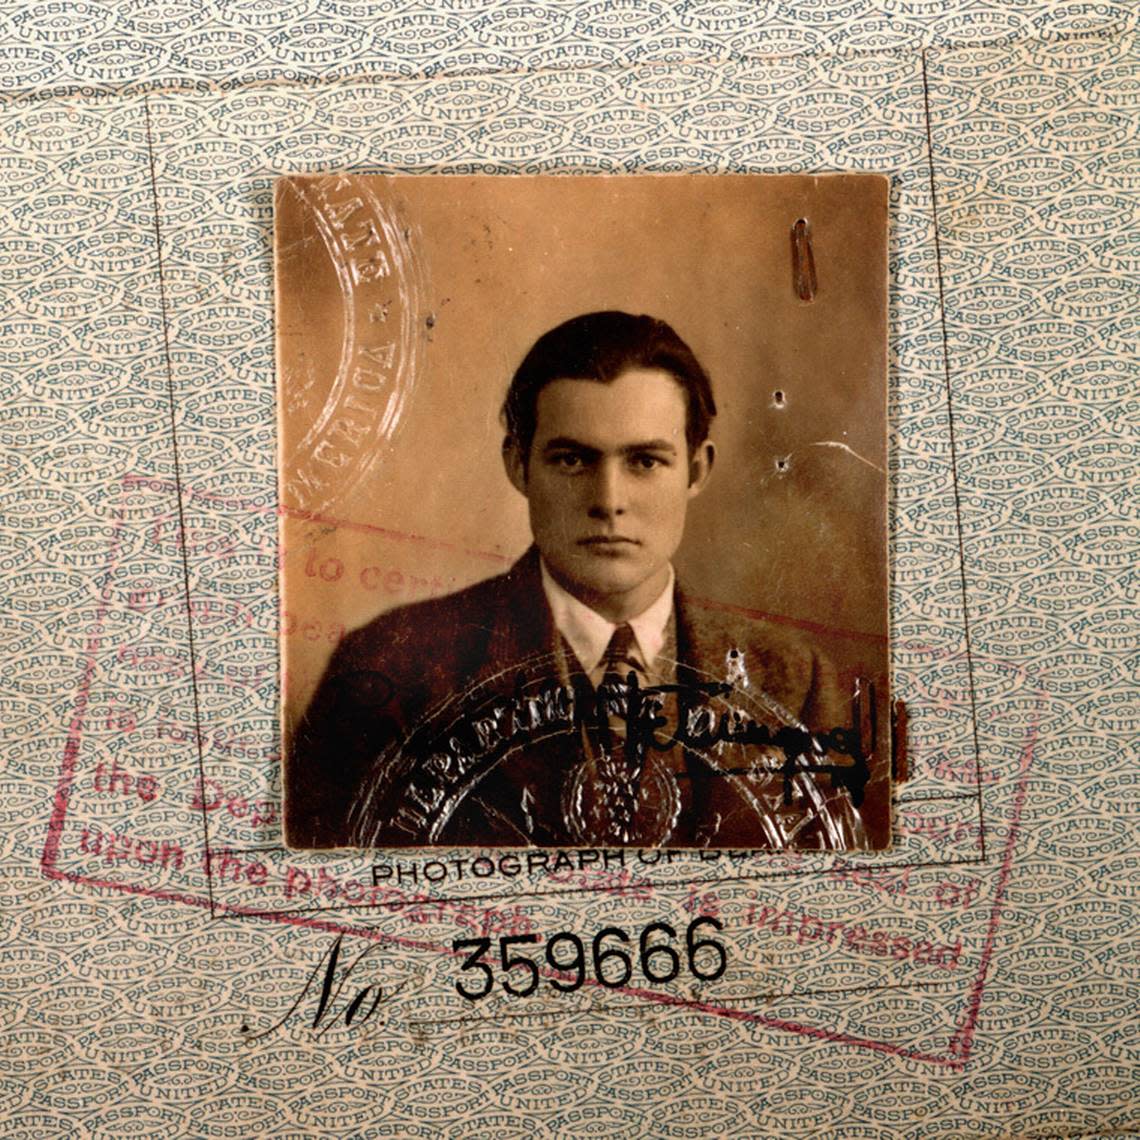 Ernest Hemingway’s 1923 passport photo.